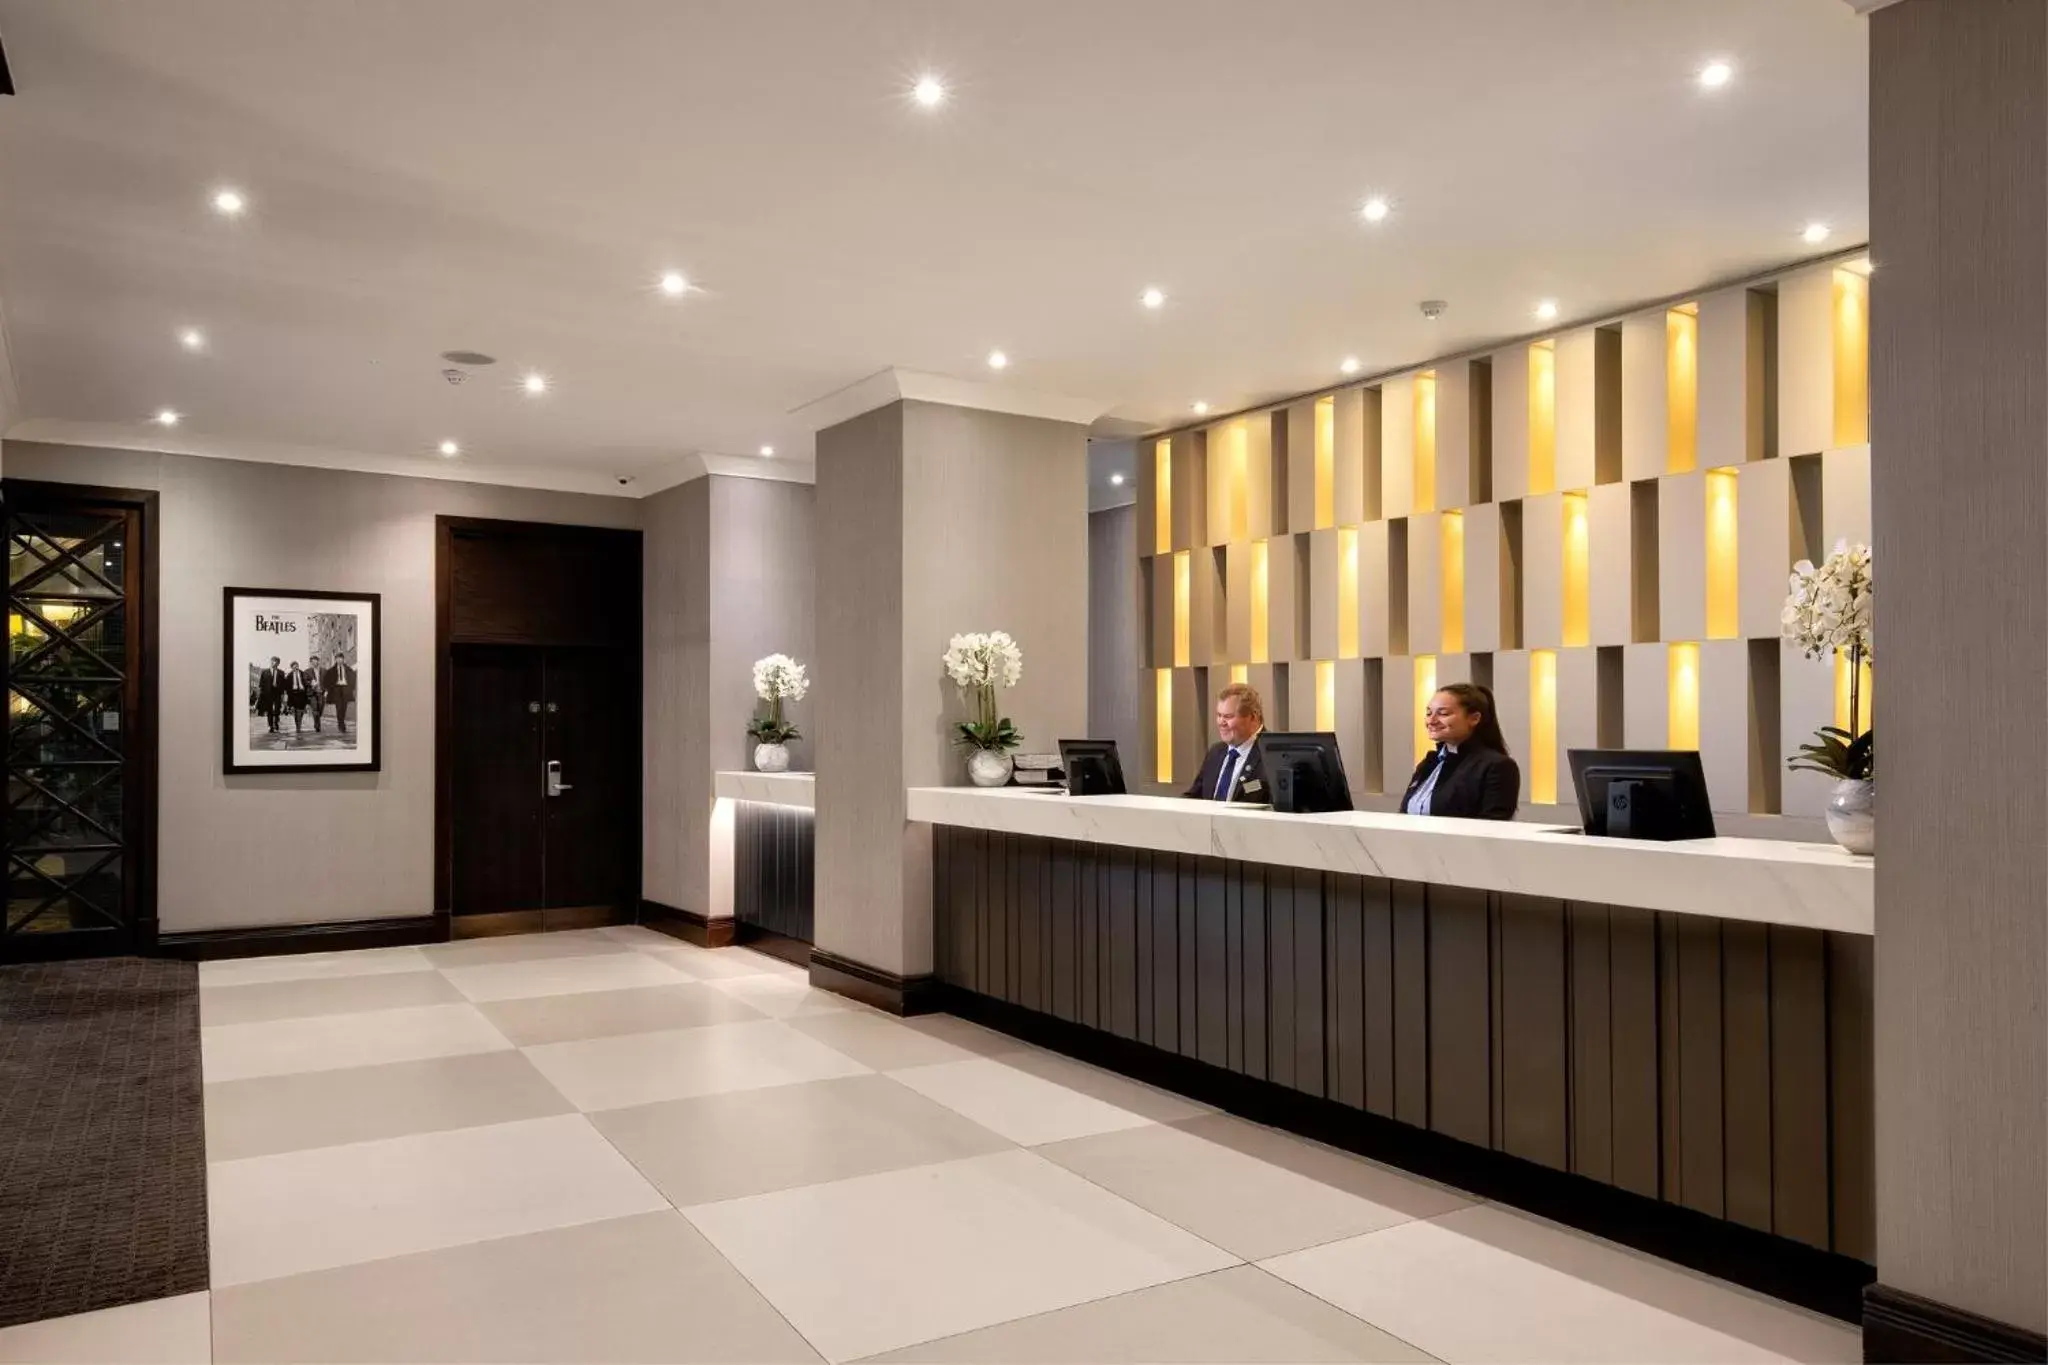 Lobby or reception in President Hotel